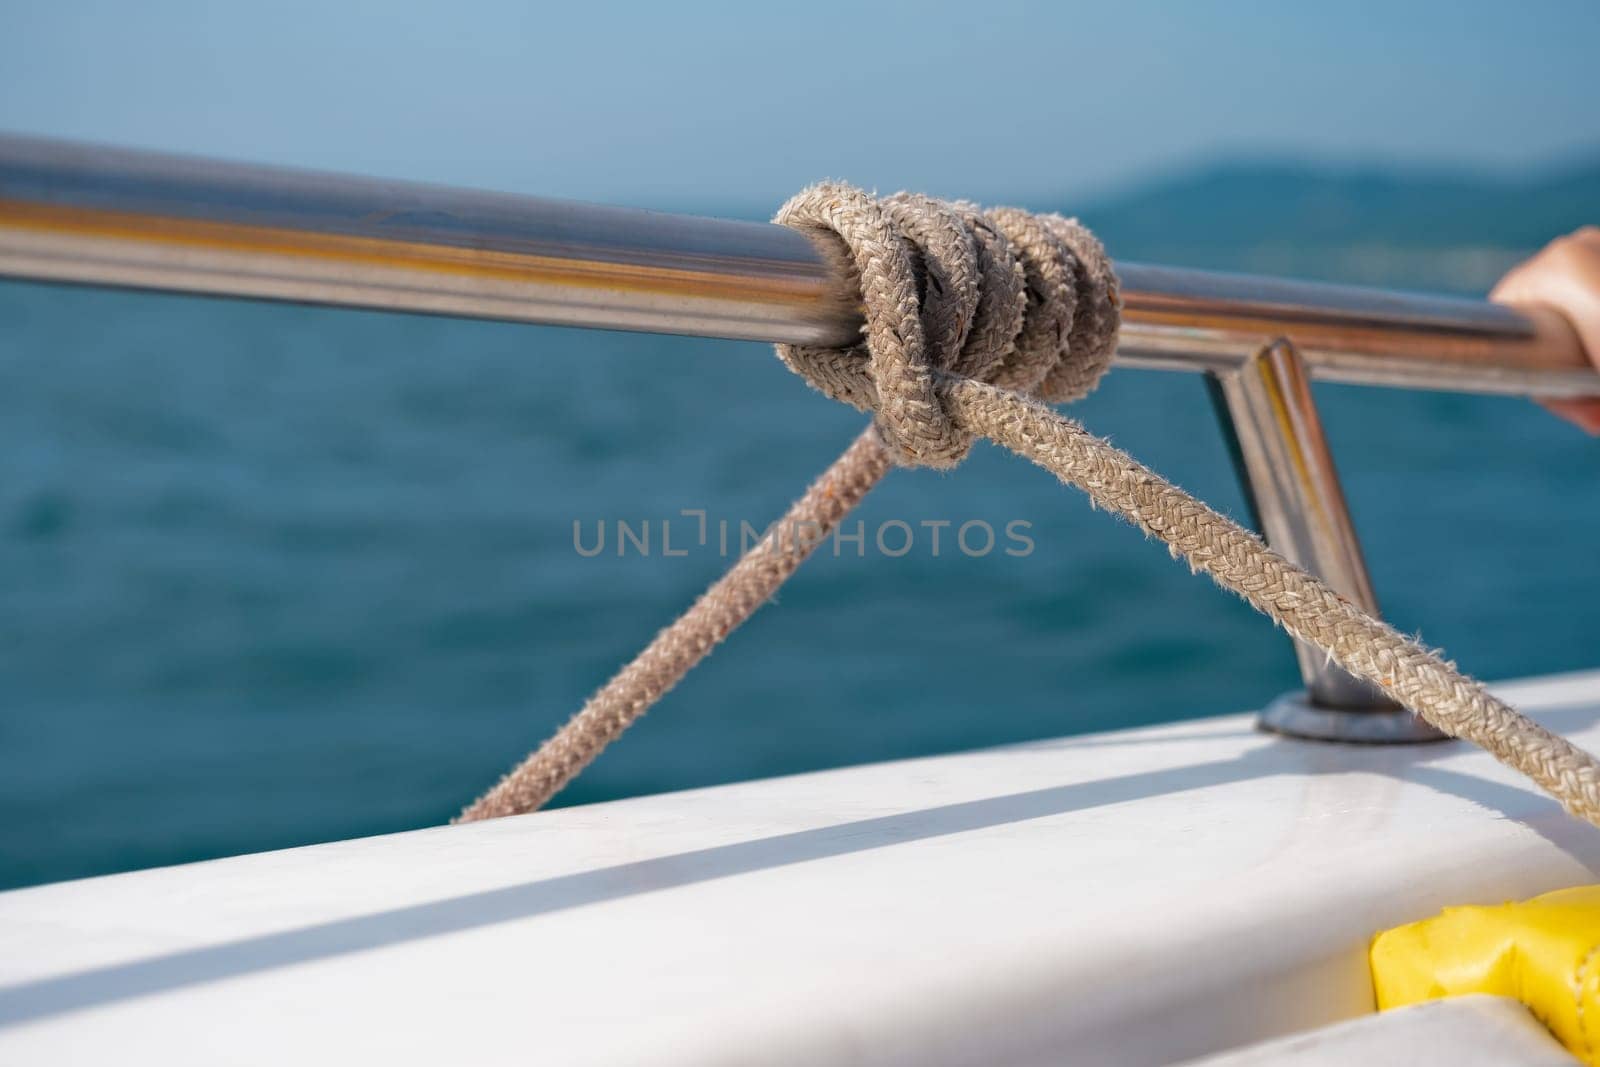 Marine knot detail on stainless steel boat railing banister by NataliPopova